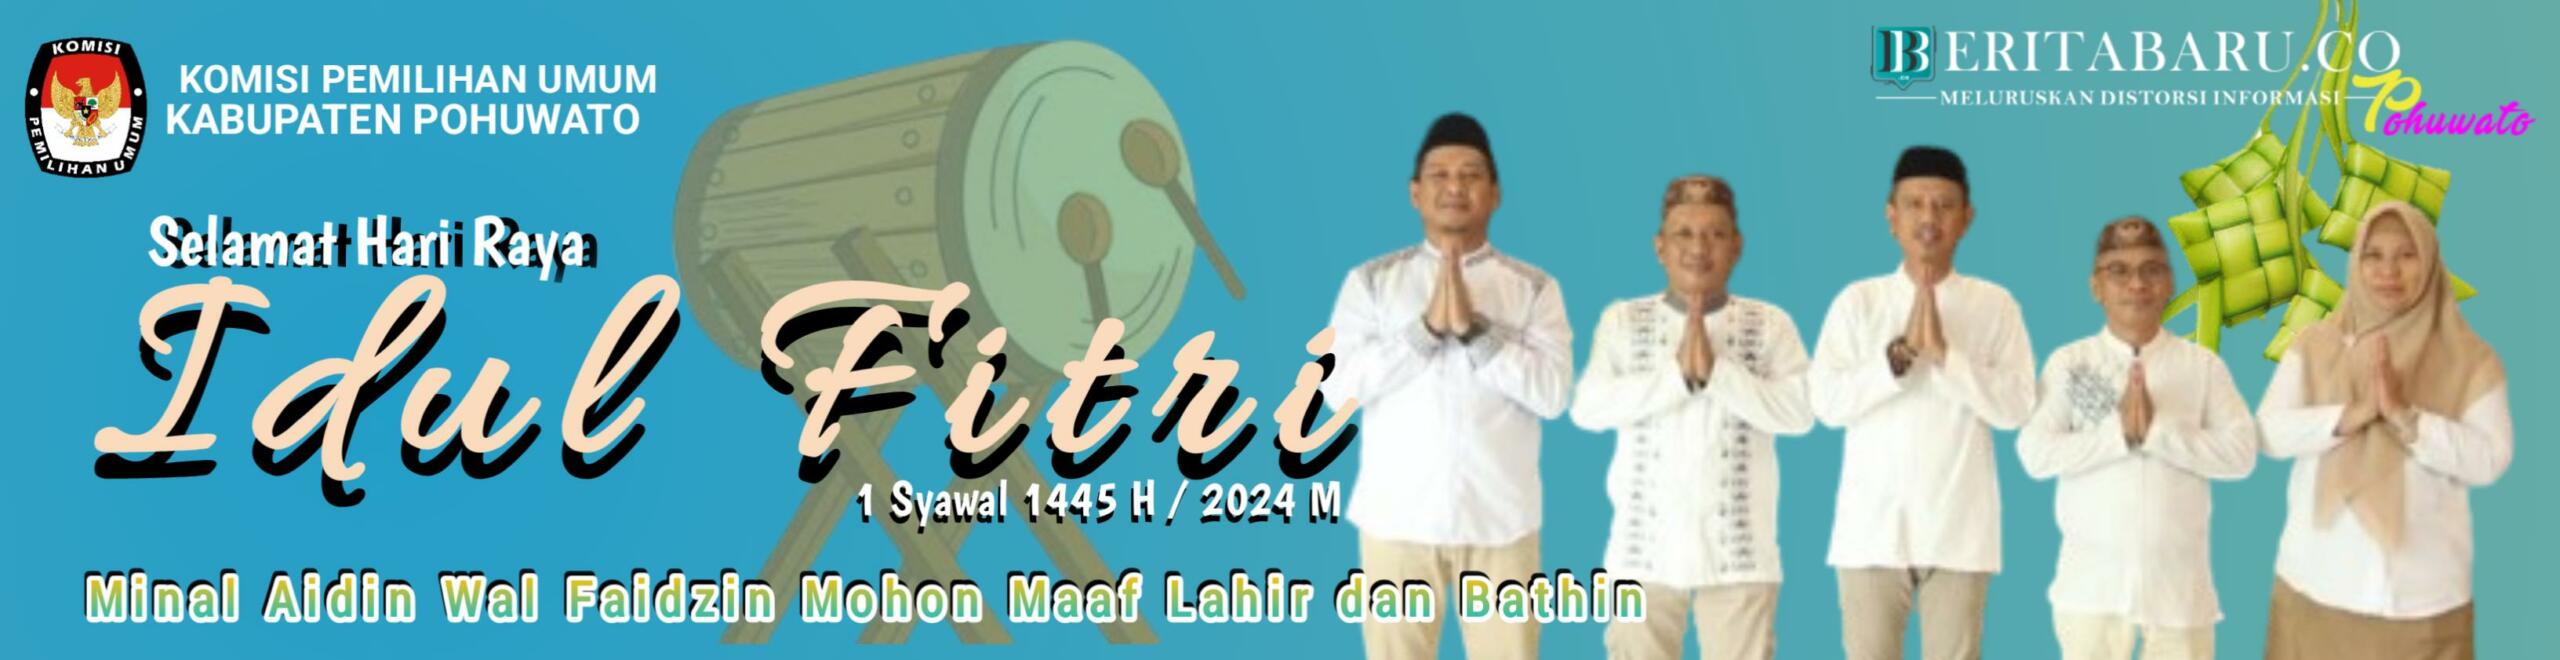 Iklan Idul Fitri KPU Pohuwato